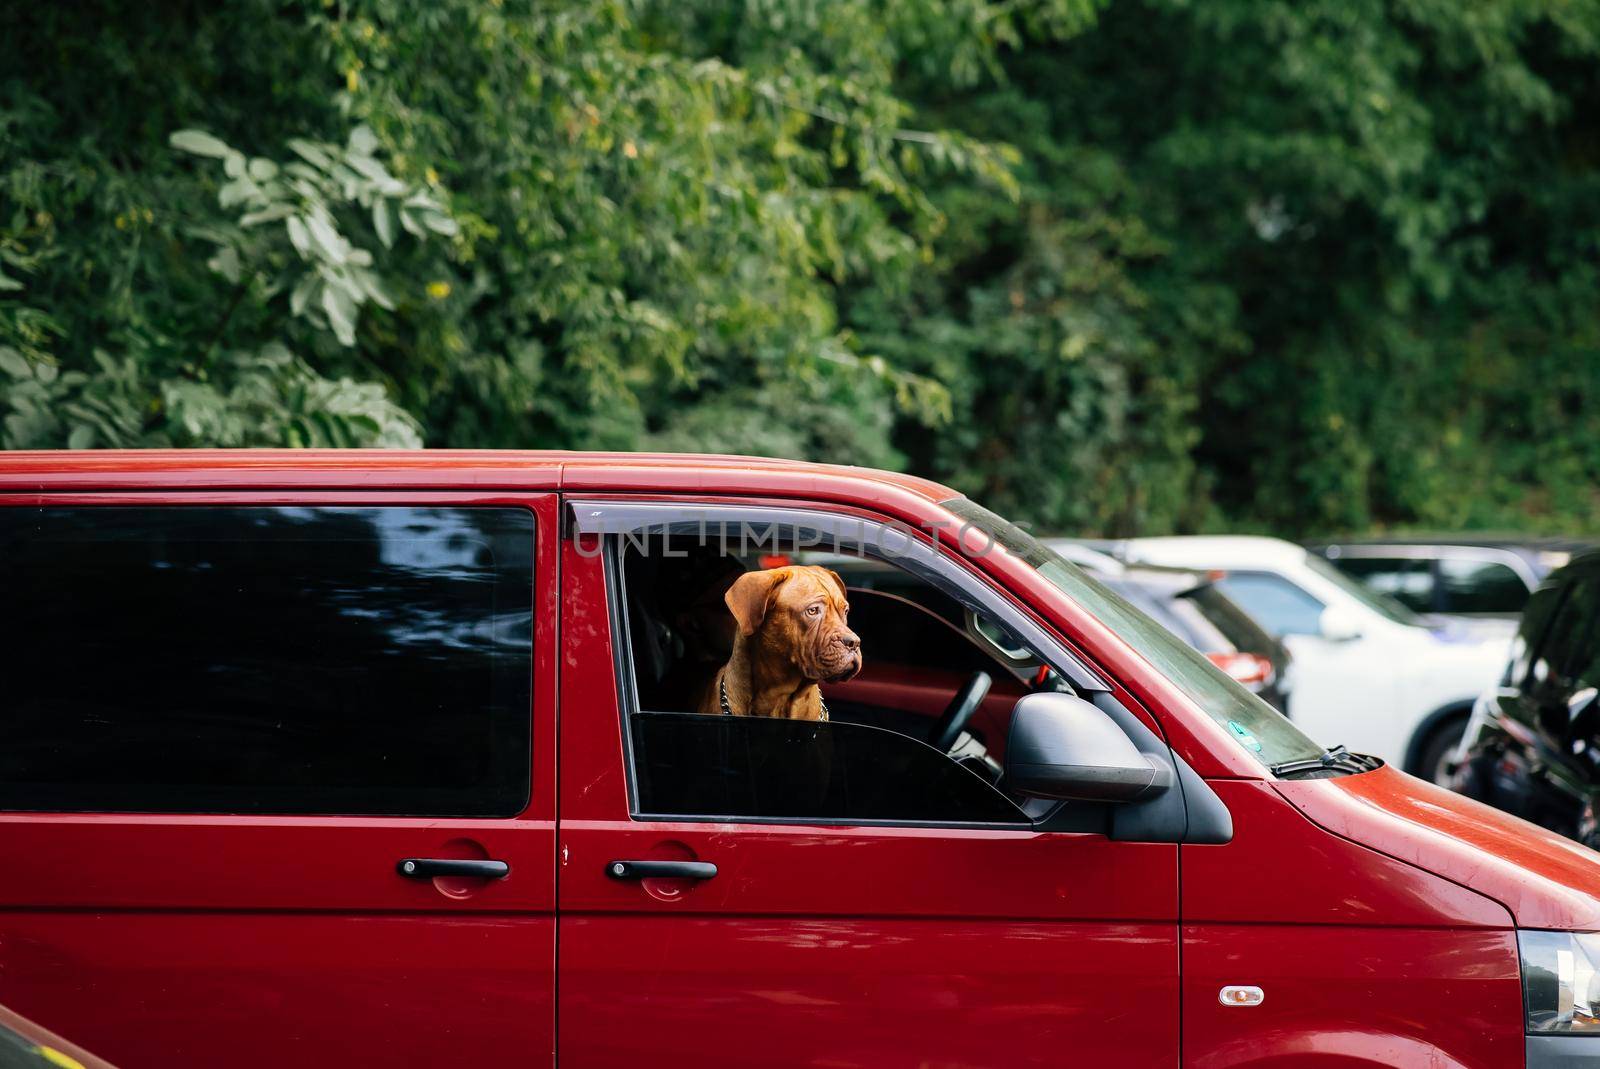 The dog stuck its head out of the car window by teksomolika